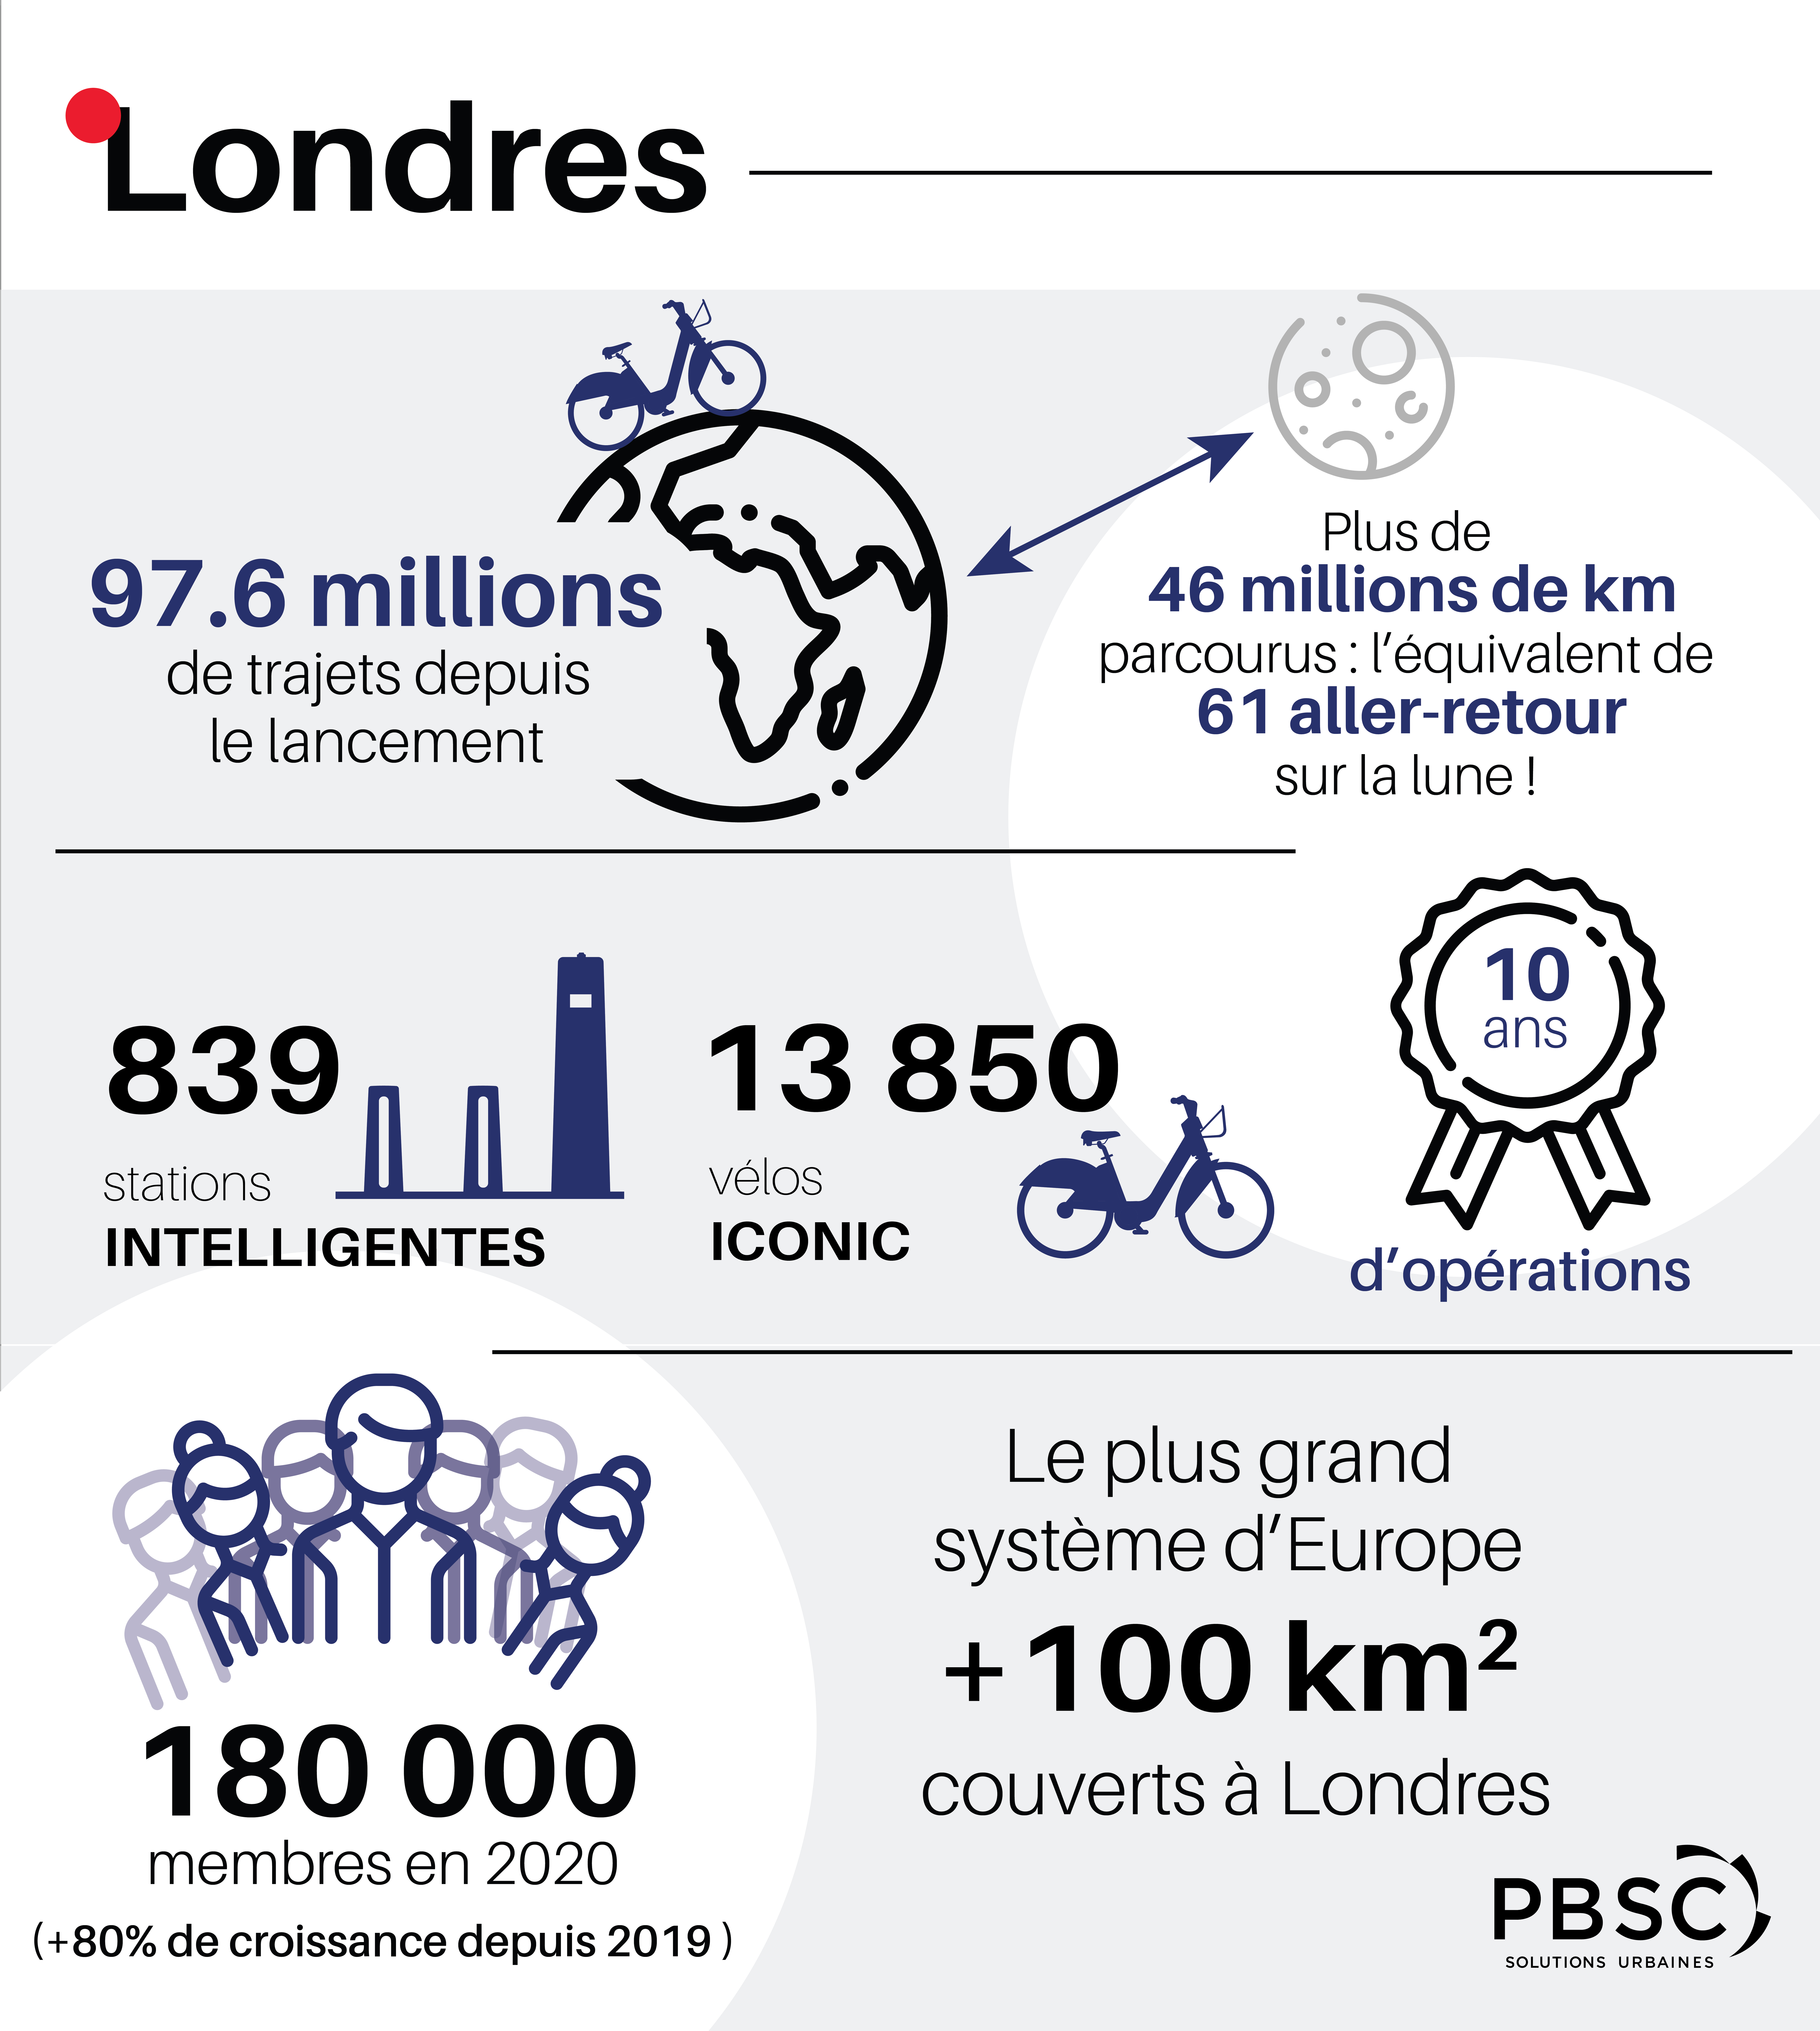 infographic-Londres-Fr.jpg (5.33 MB)